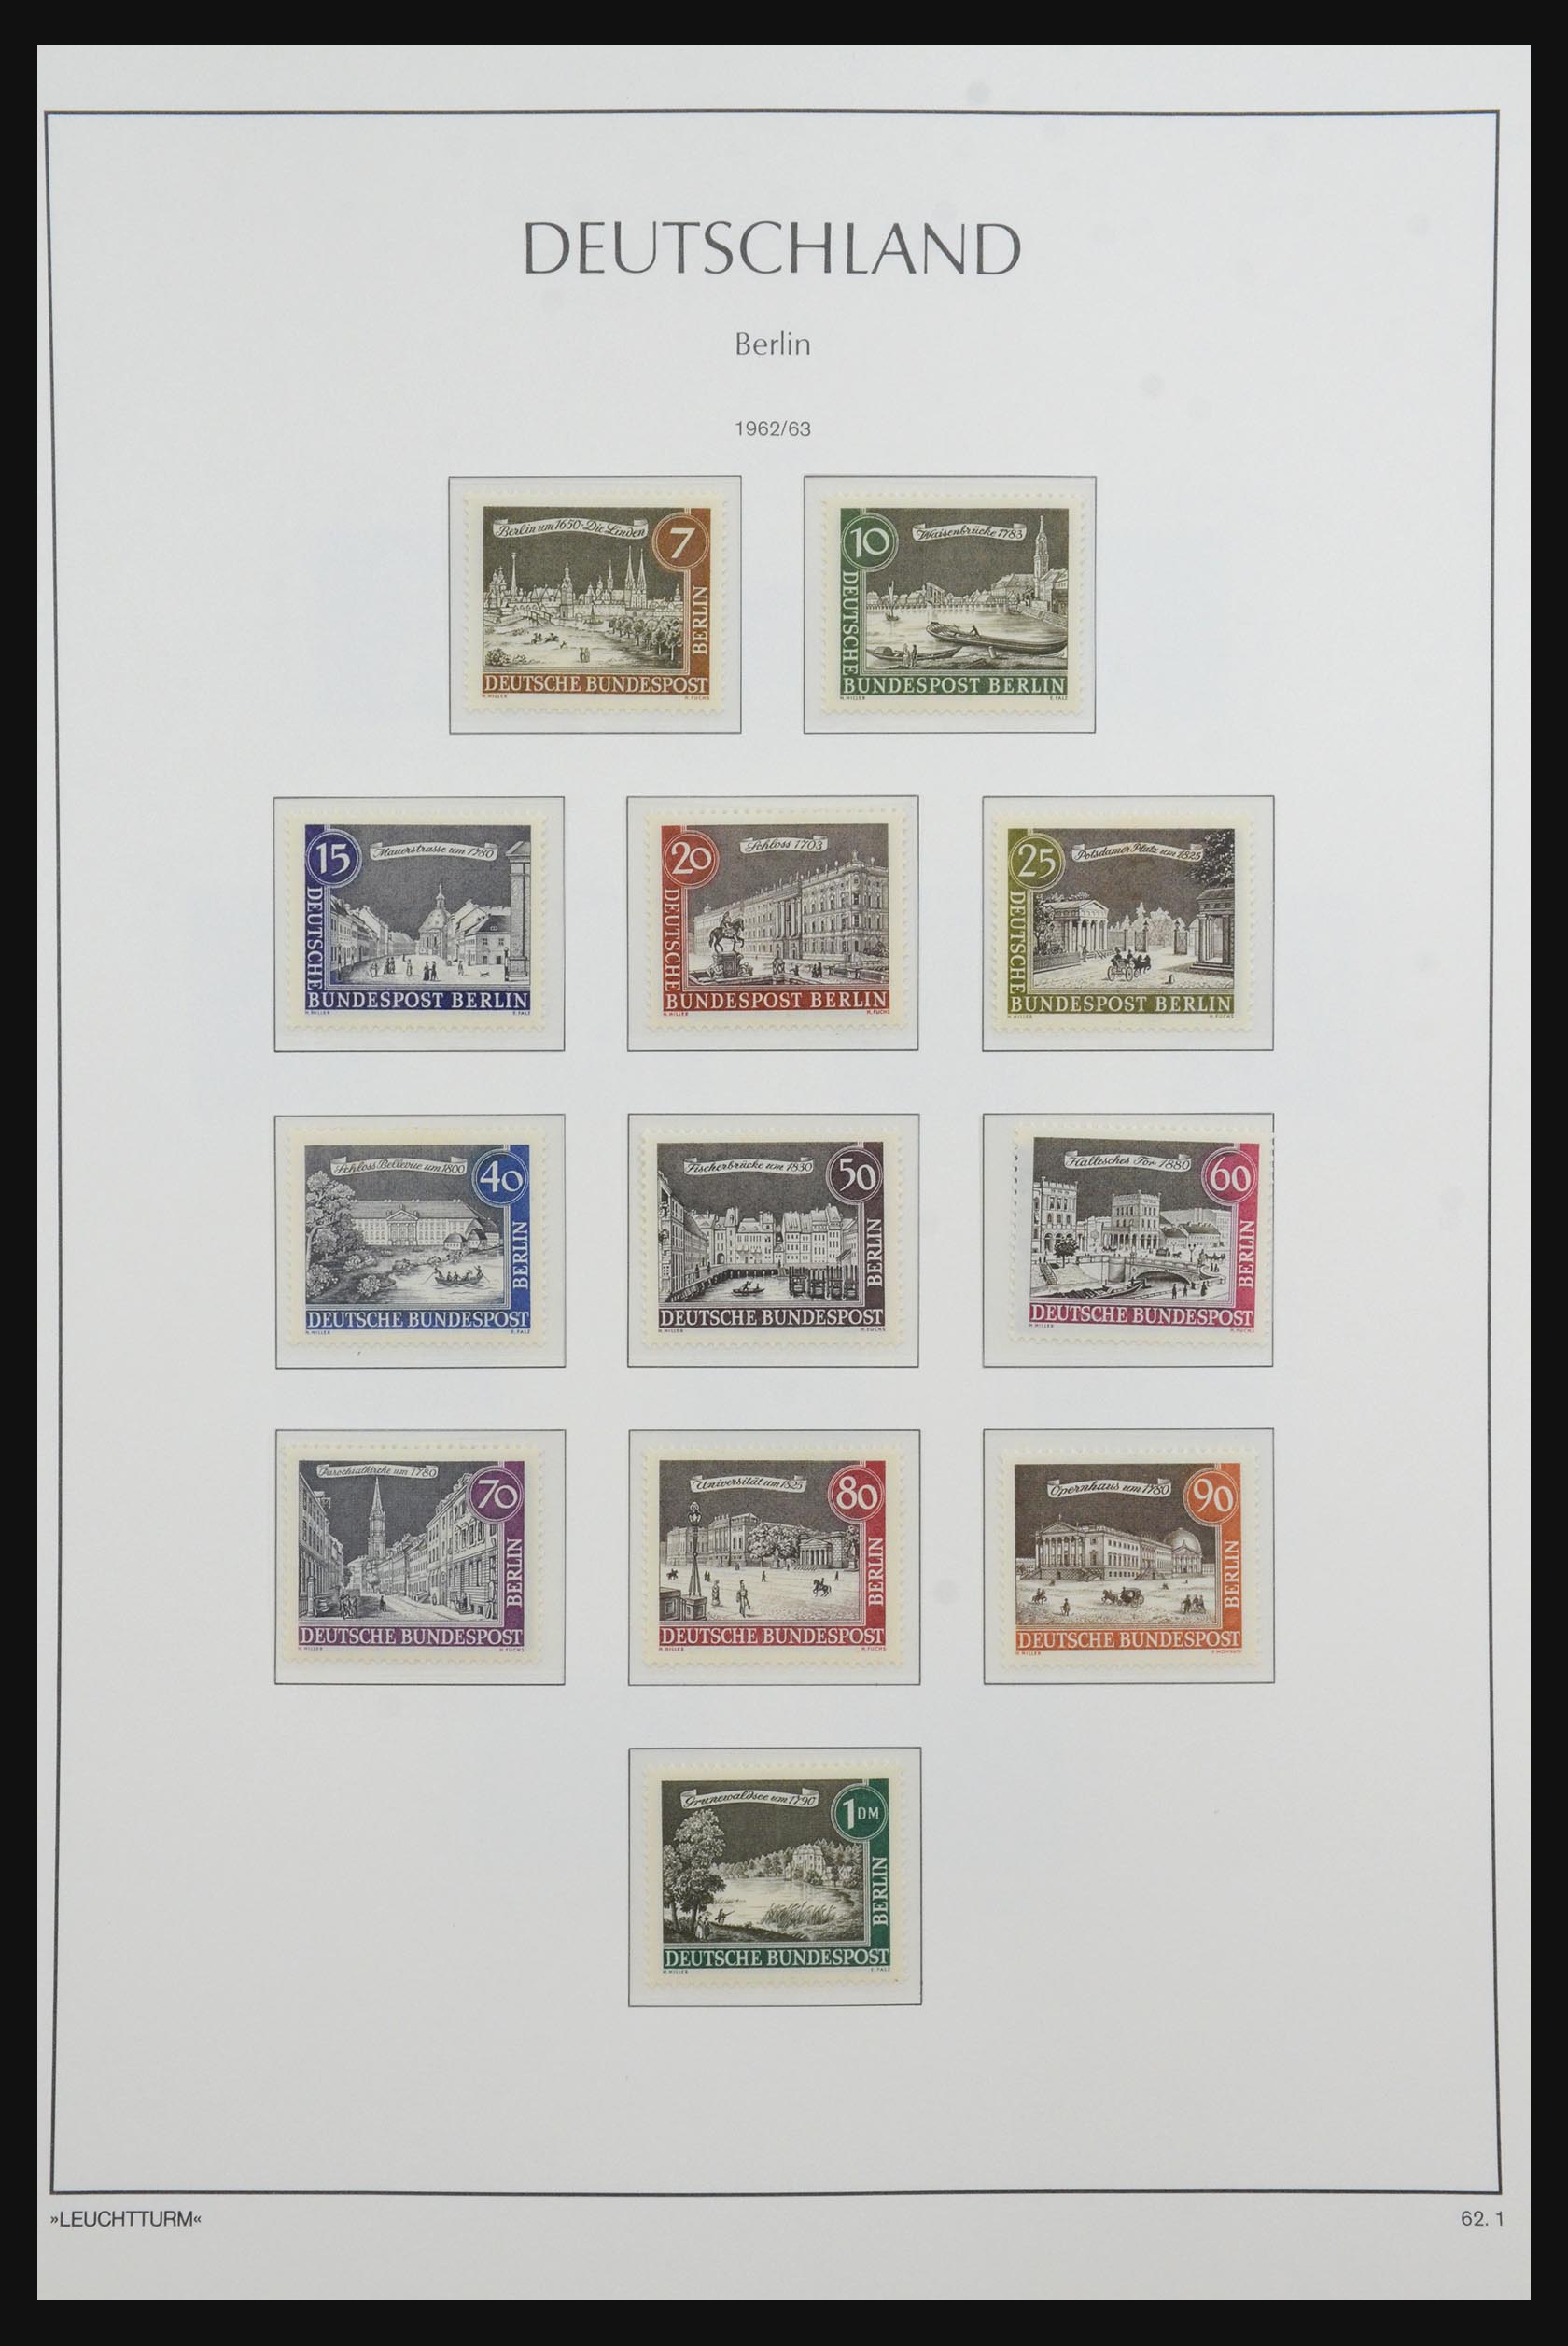 31601 018 - 31601 Bundespost, Berlin and Saar 1948-2008.